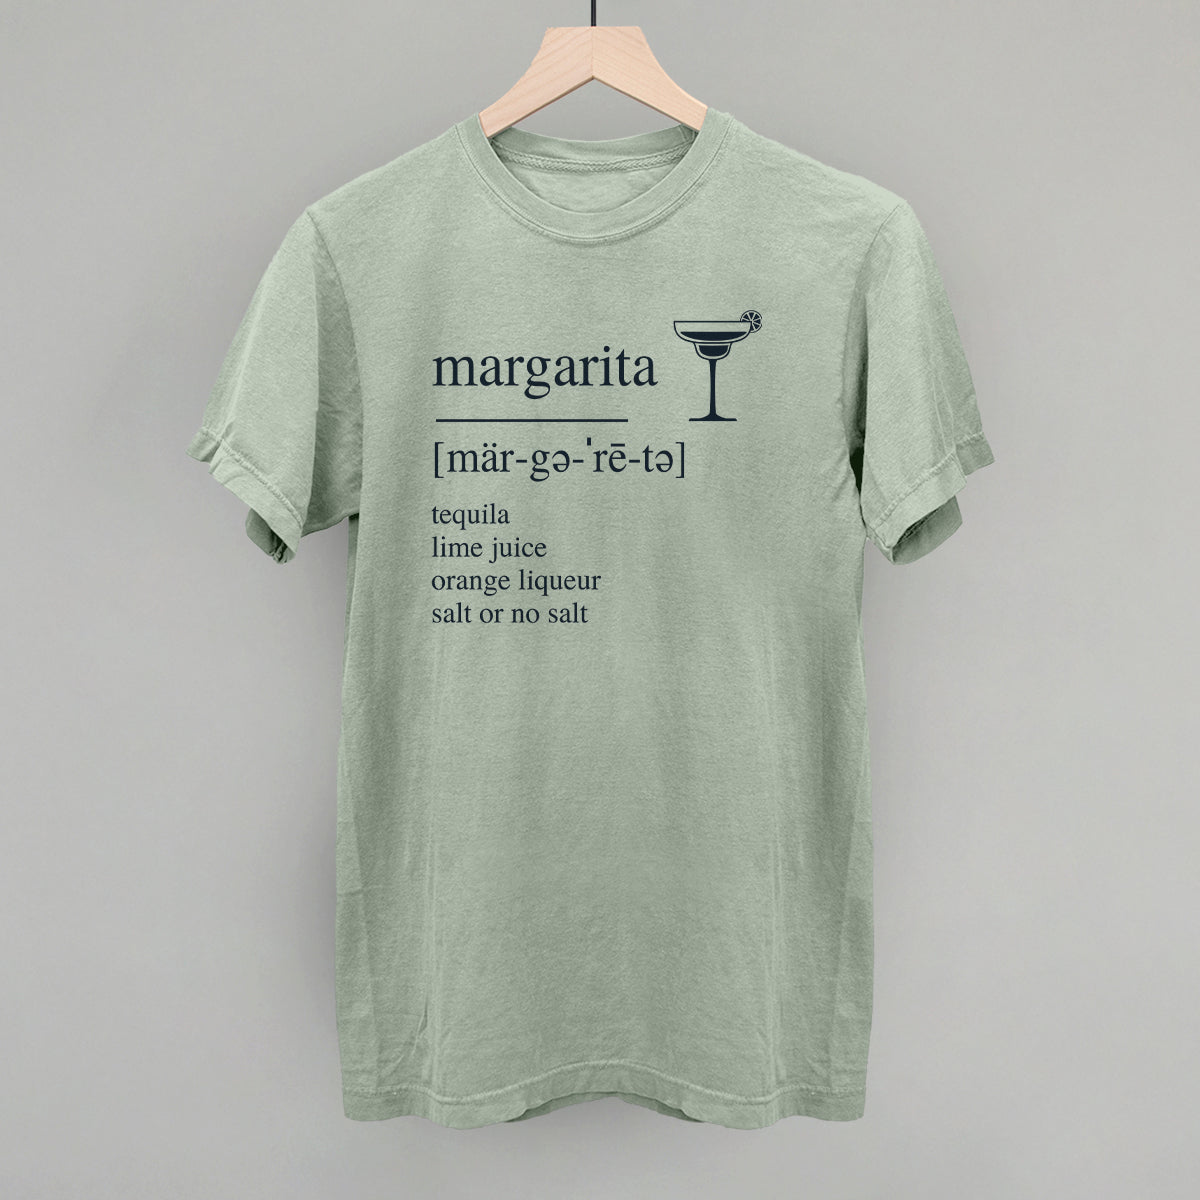 Margarita Definition